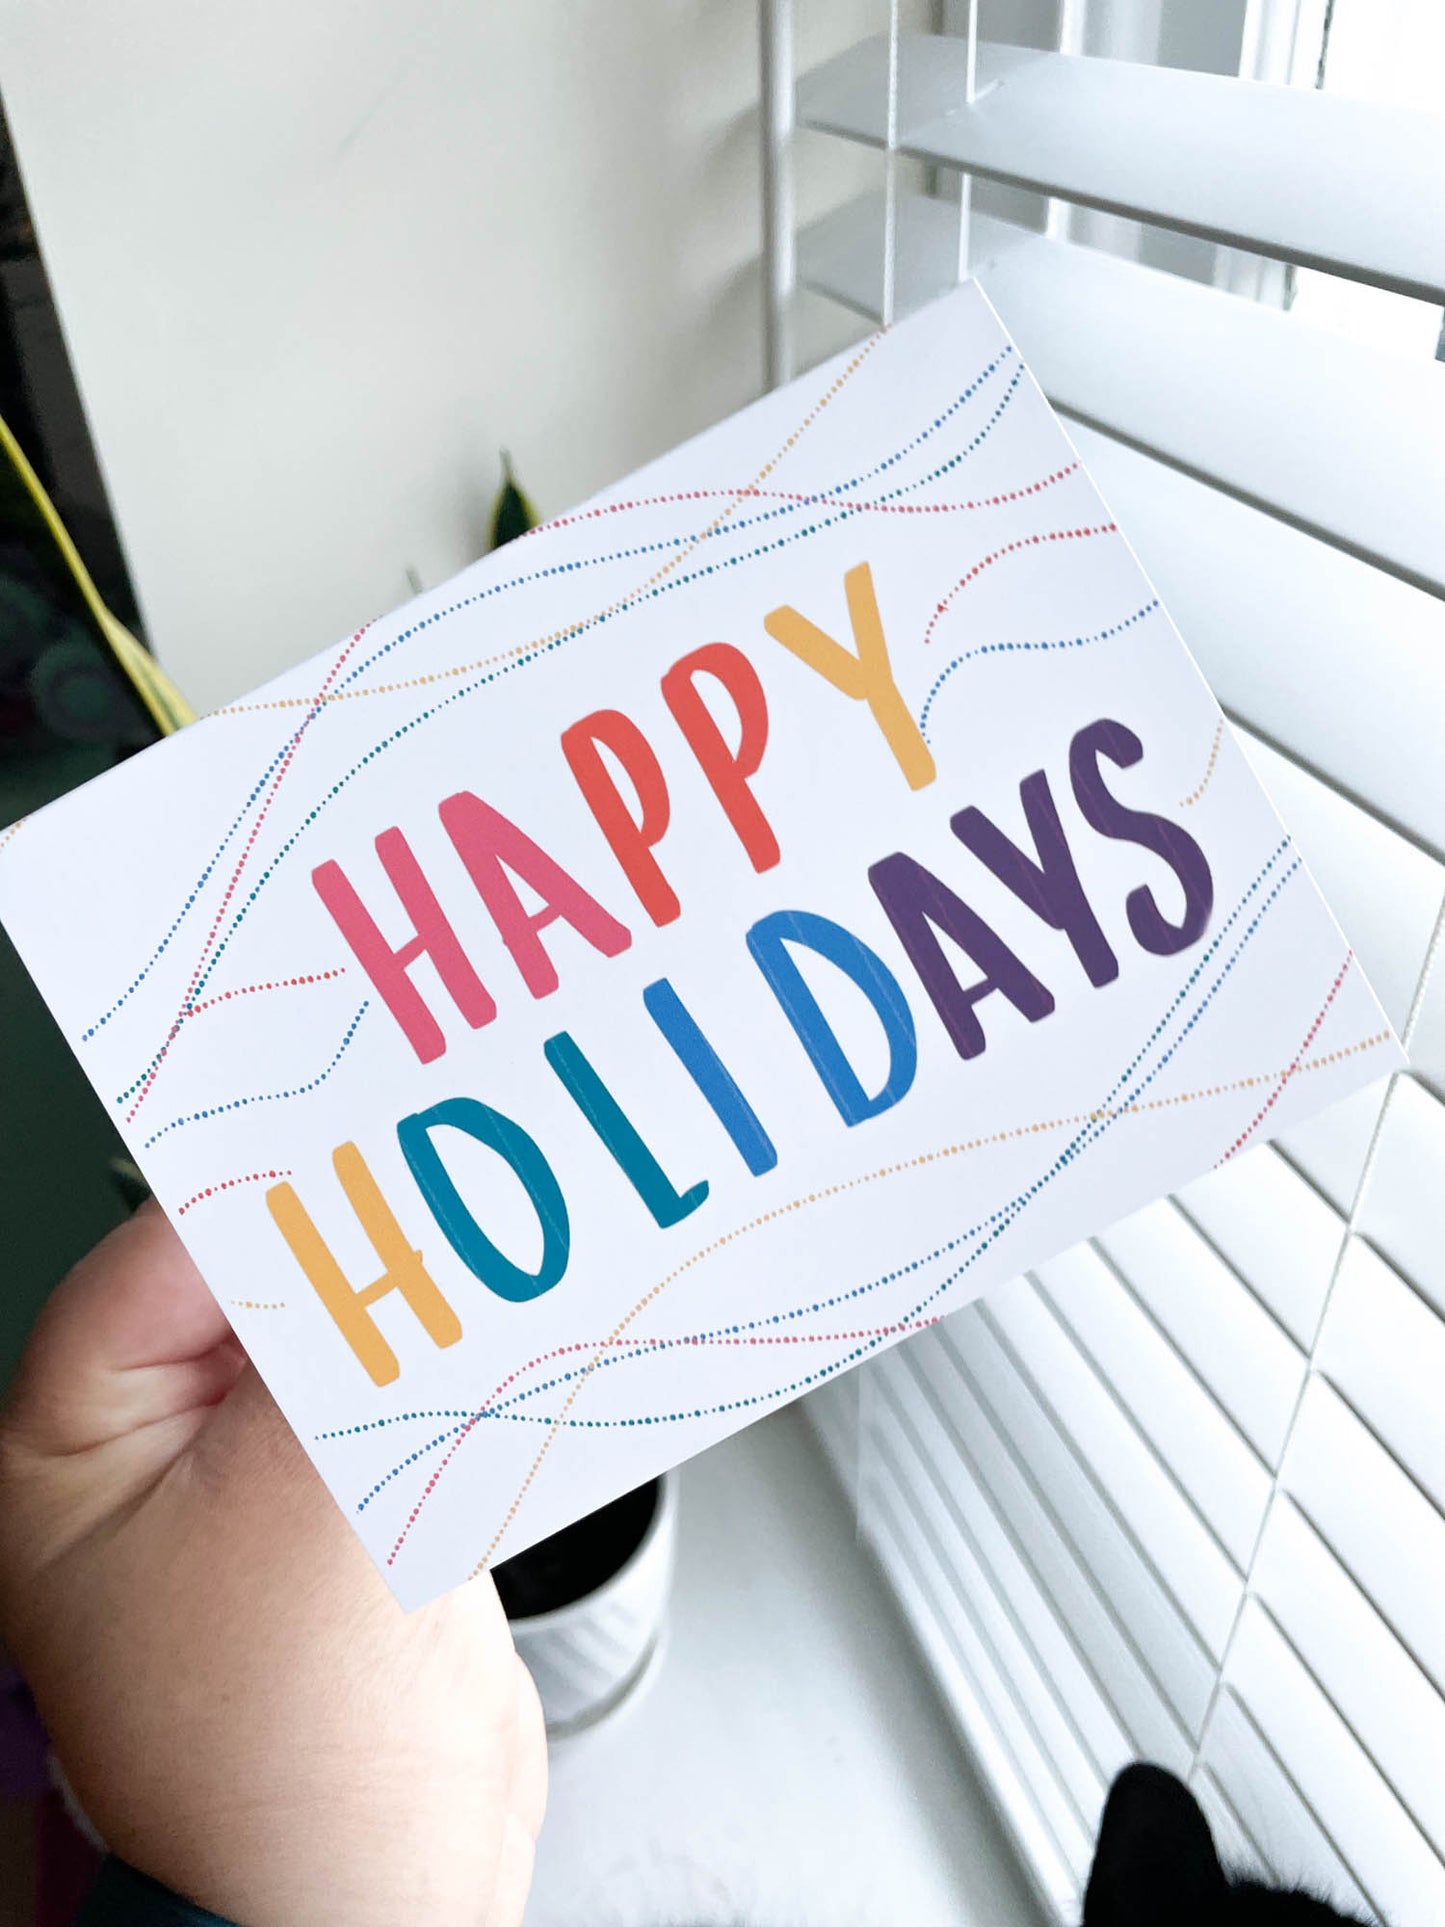 Happy Holidays Classroom Set Greeting Cards